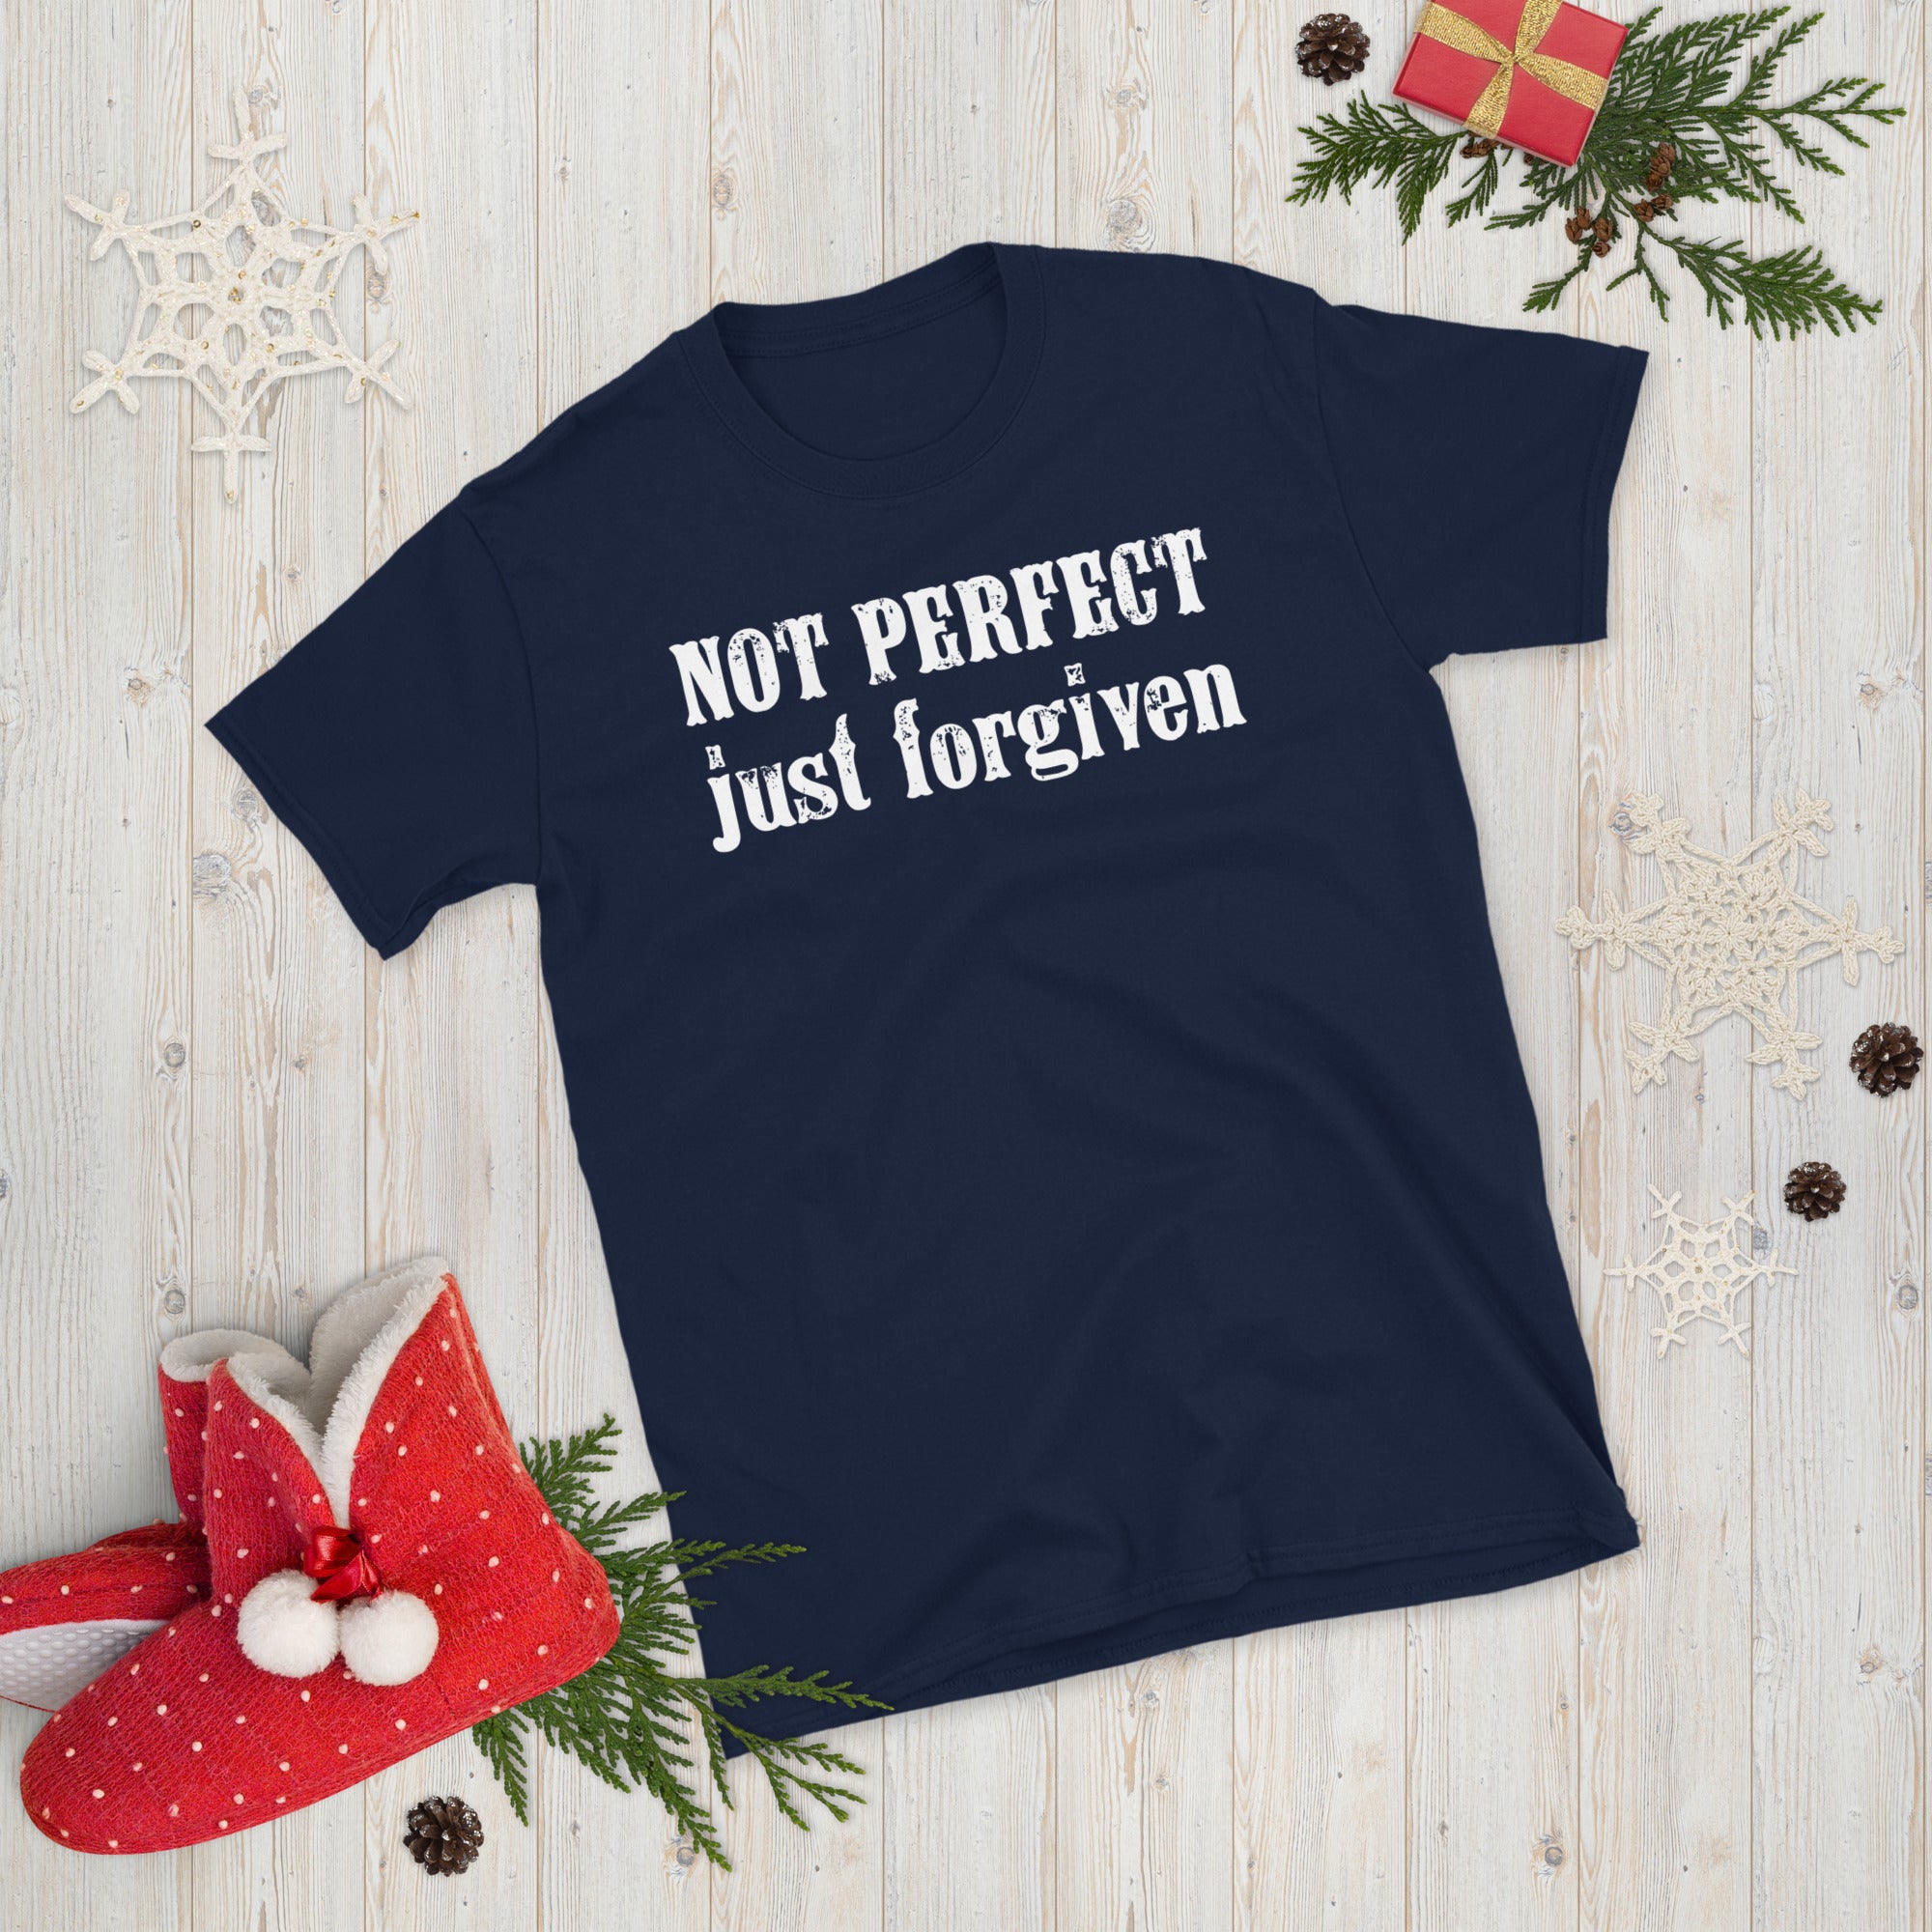 Not Perfect Just Forgiven Shirt, Christian Shirt, Religious Gifts For Men Women, Bible Verse Tshirt, Religious Gifts, Holy Bible T Shirt - Madeinsea©